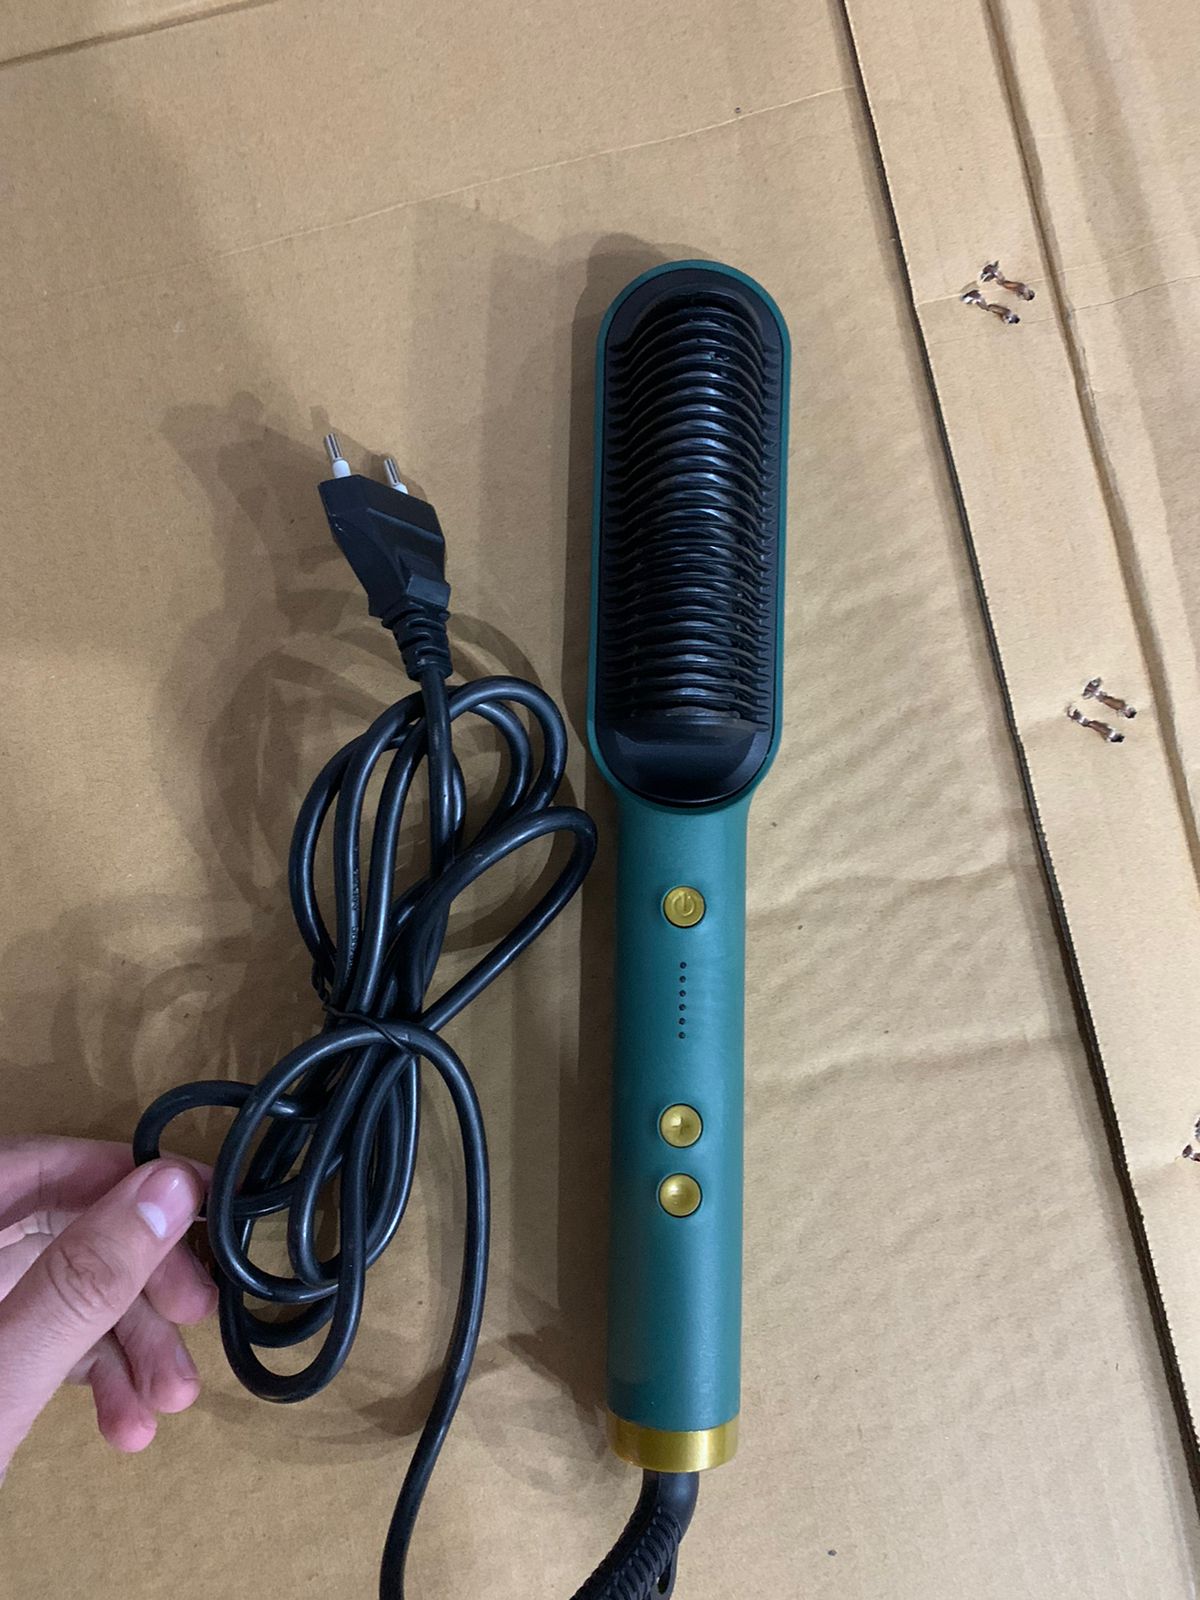 Remingdong electric hair brush straightener